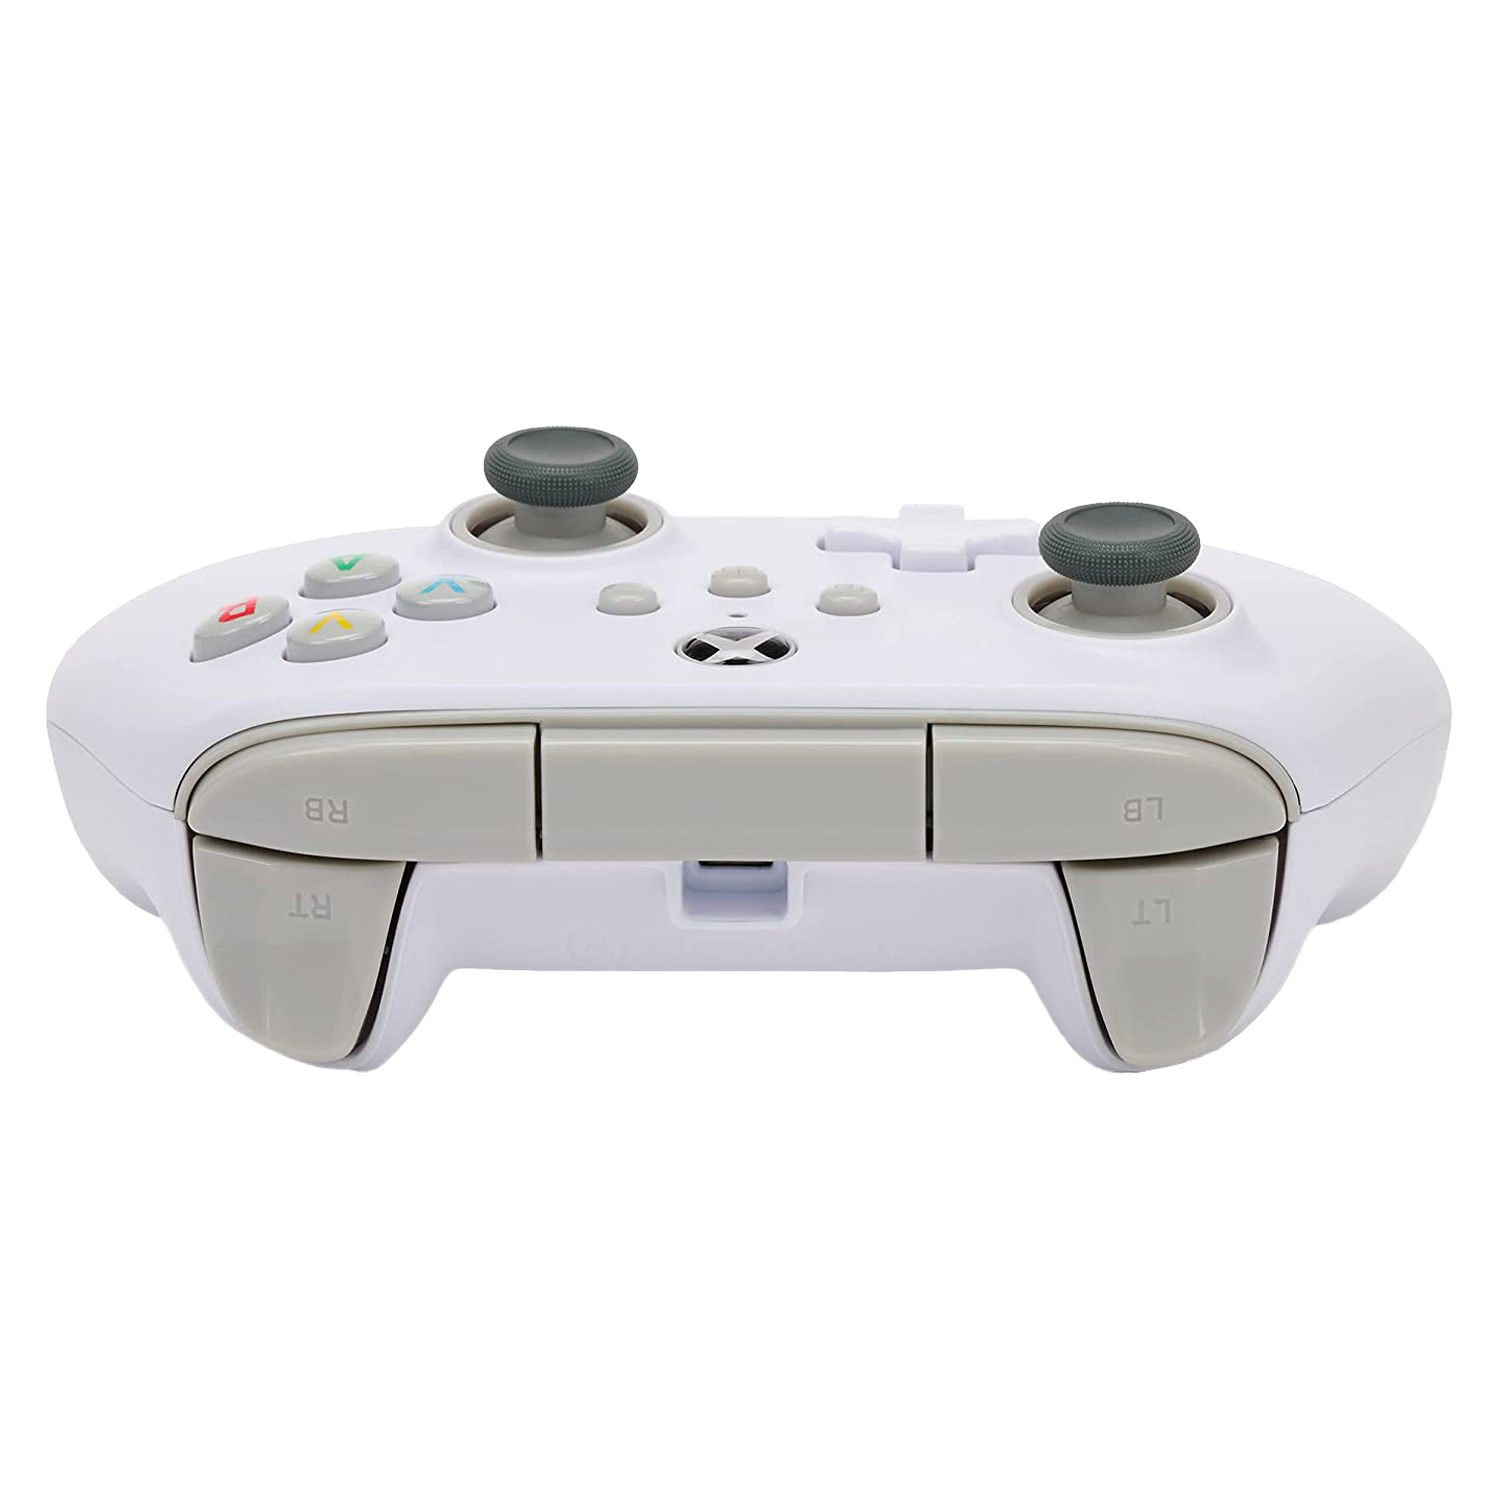 Controle Xbox One PowerA Enhanced Wired Controller - Branco (PWA-A-02541)